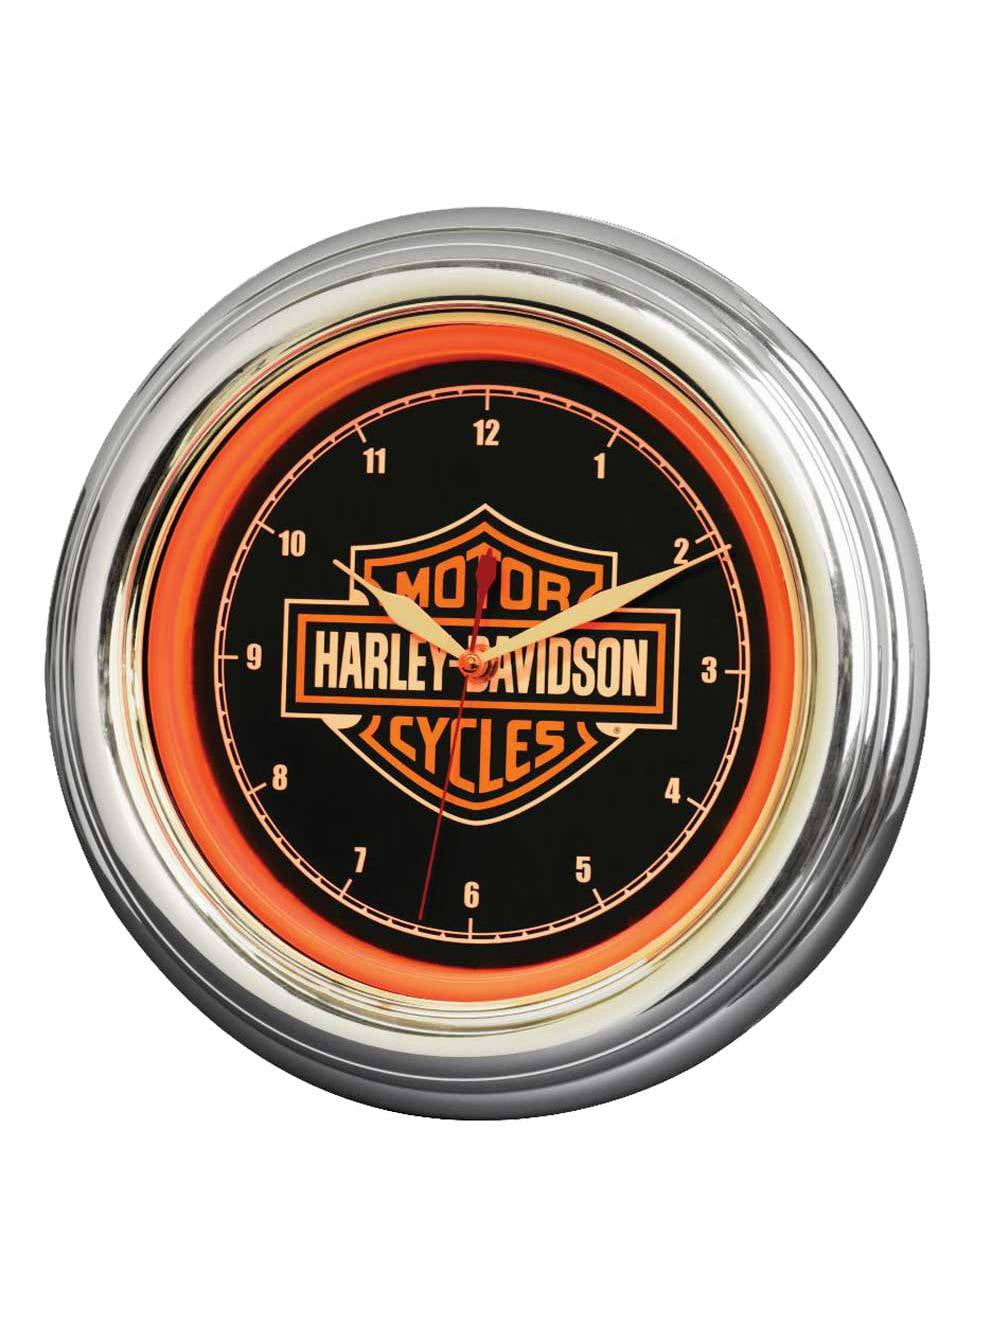 Harley Davidson Bar Shield Led Clock Long Lasting Bright Orange Hdl 16633 Harley Davidson Walmart Com